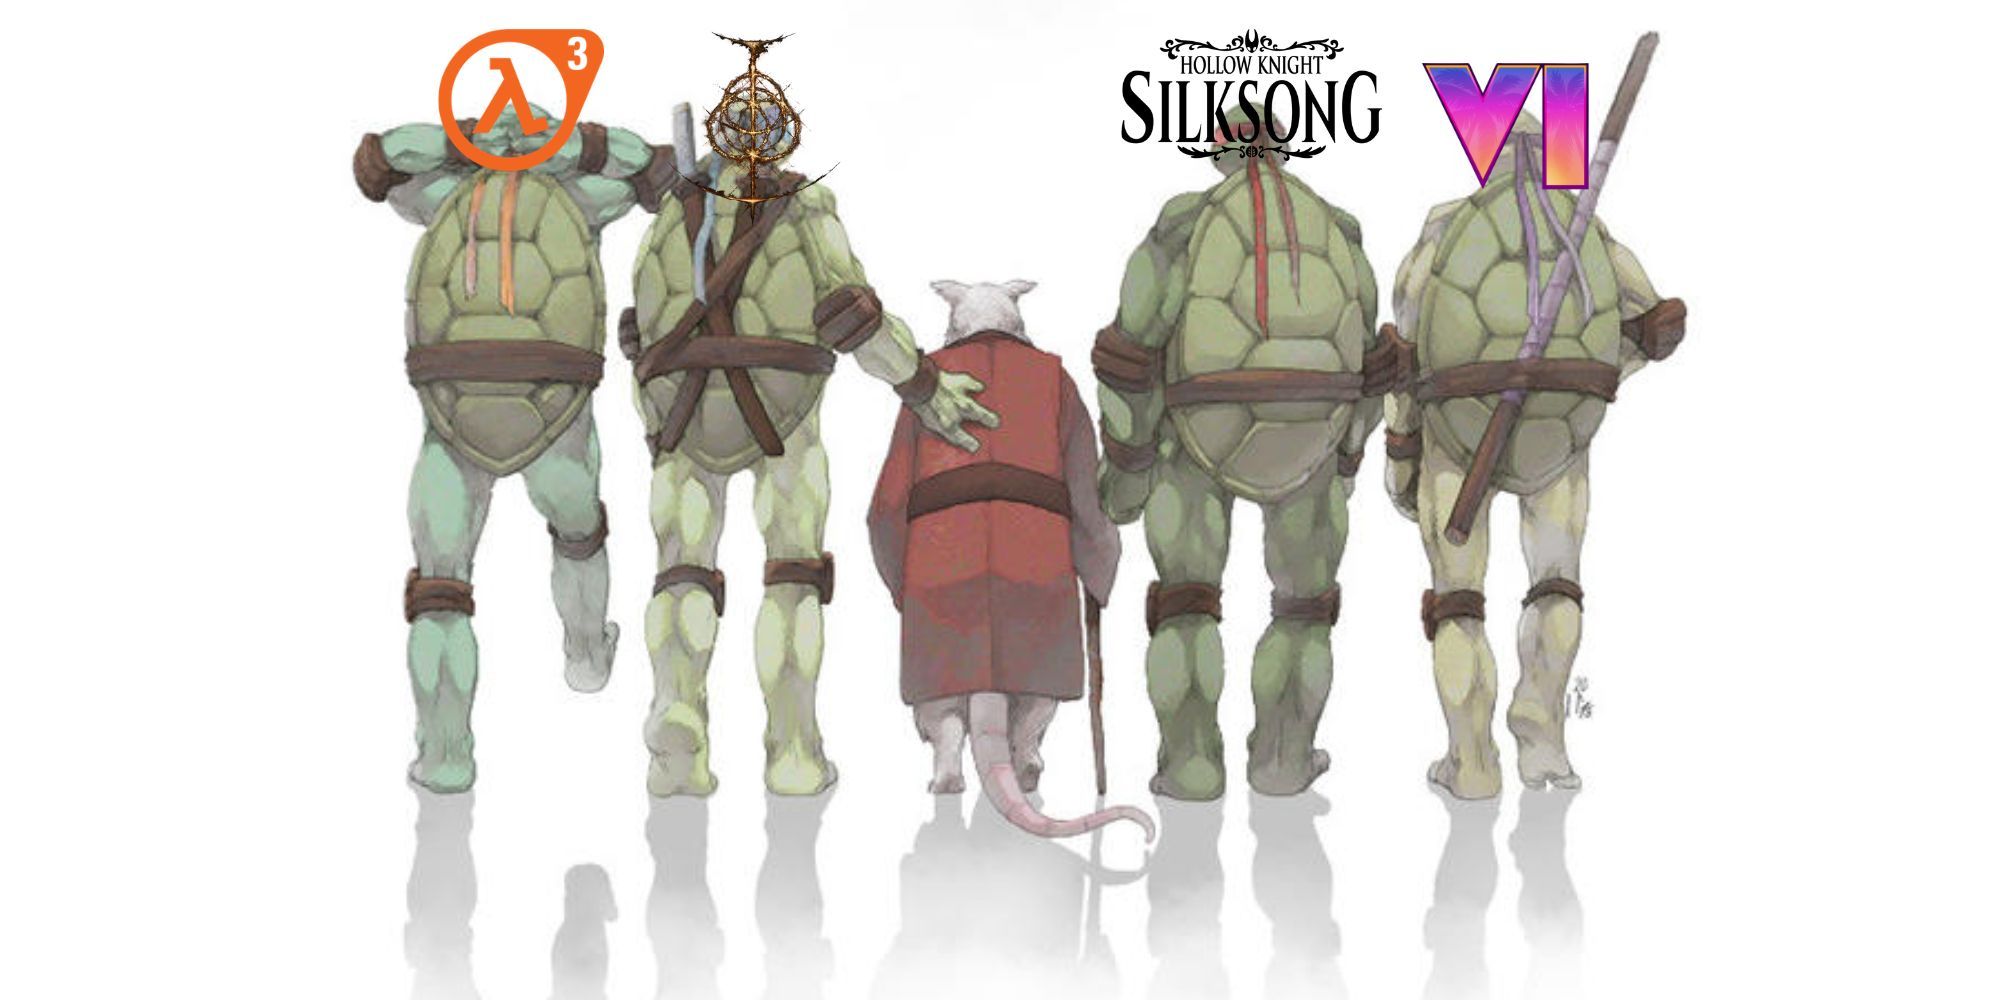 Turtles walking with Splinter meme, with Half life 3, Elden Ring, Silksong, and GTA 6 logos